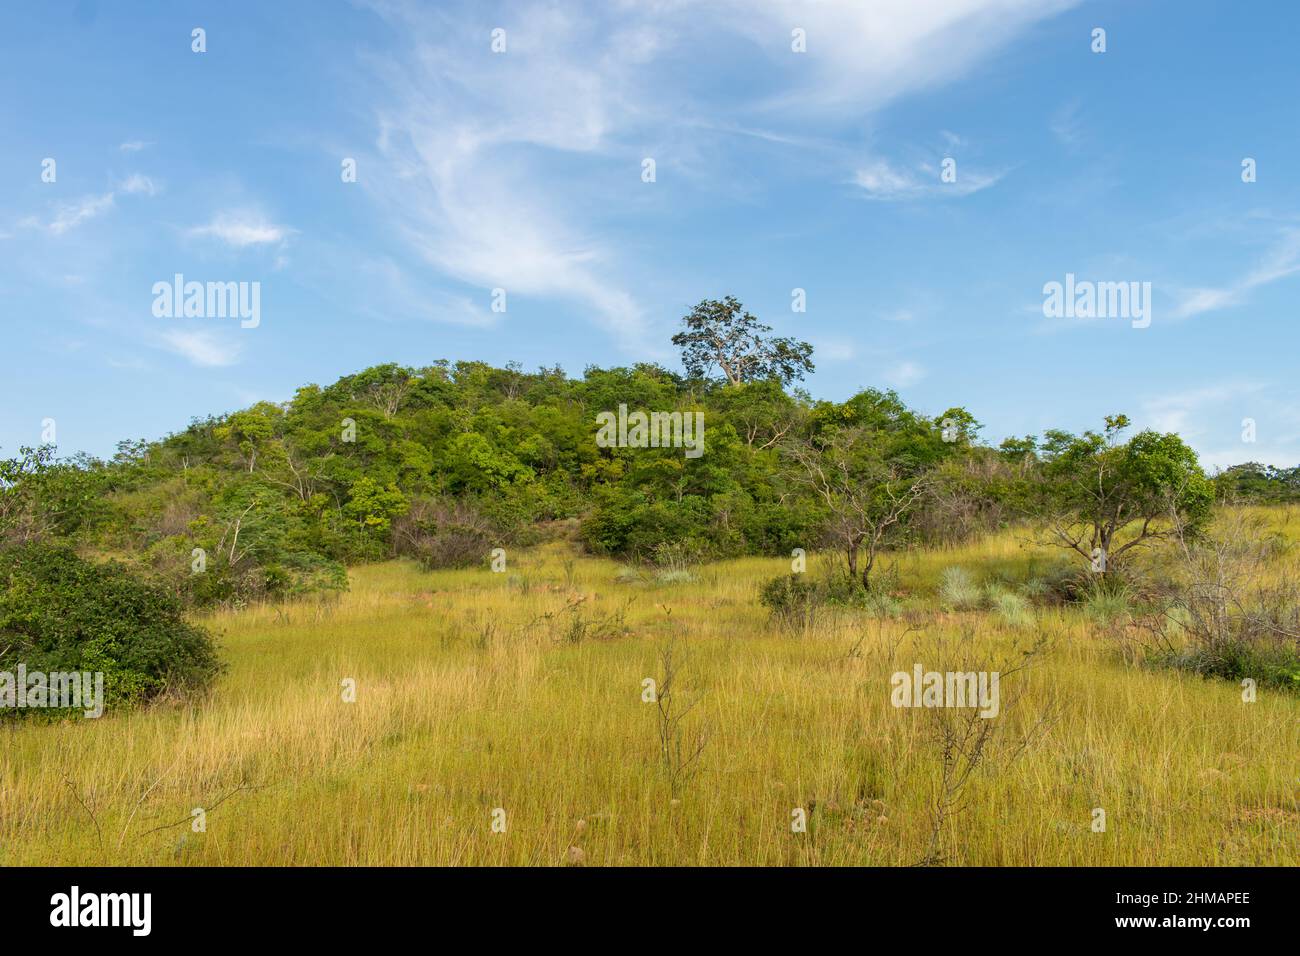 Savannenlandschaft im Caatinga-Biom - Oeiras, Bundesstaat Piaui, Brasilien Stockfoto